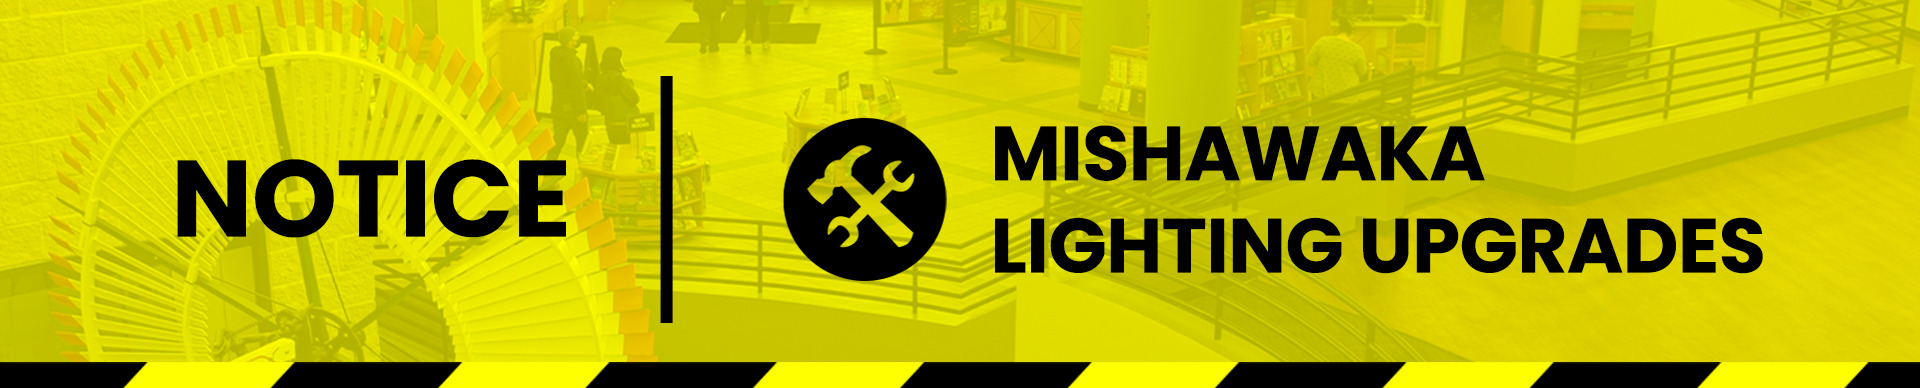 Notice: Mishawaka Library lighting upgrades